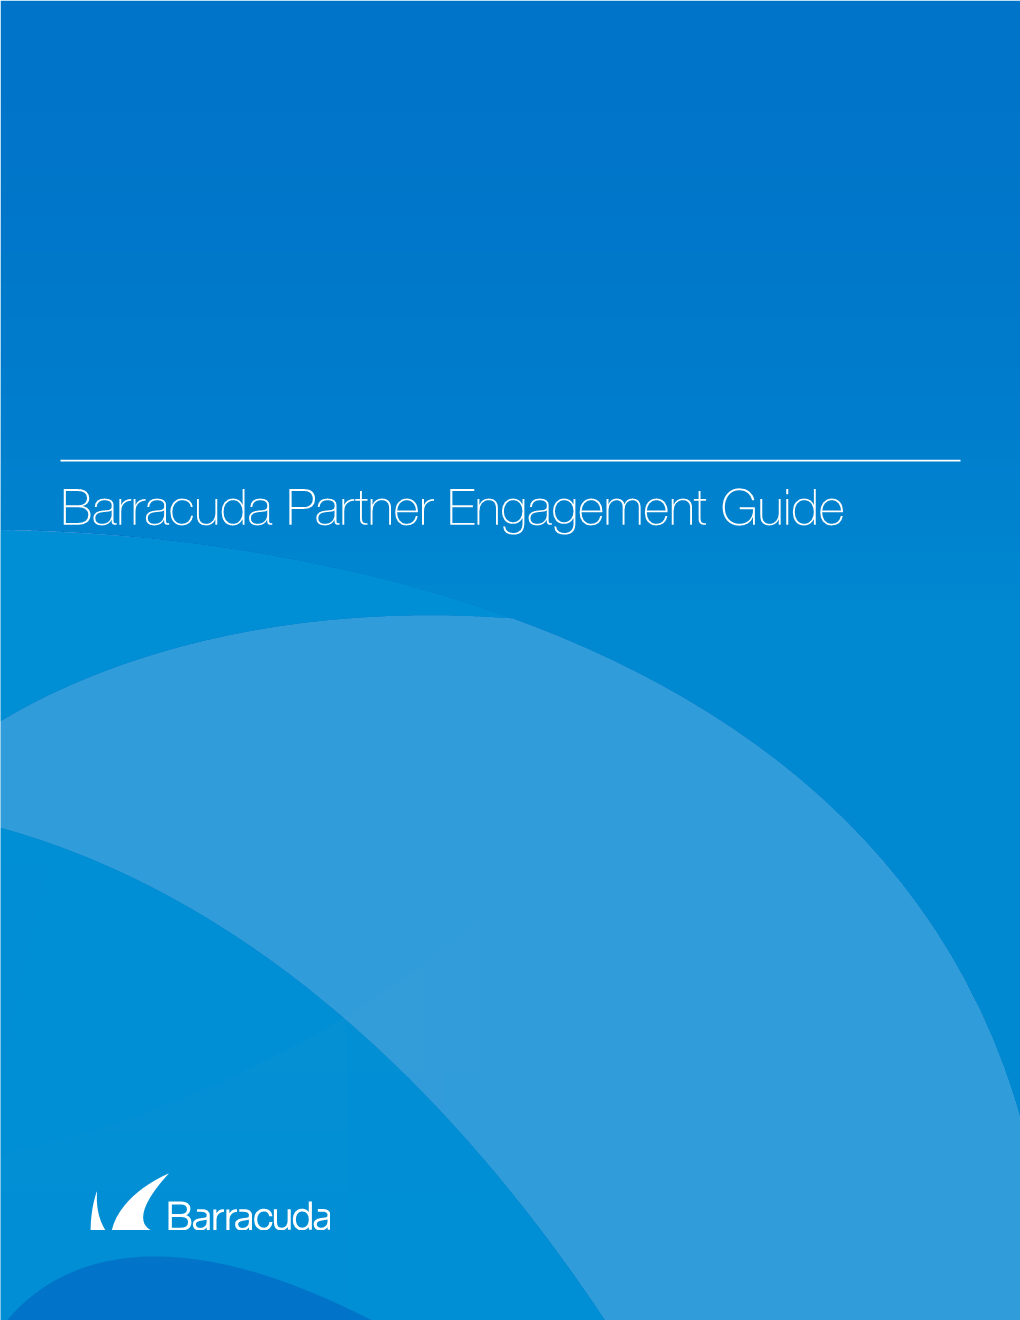 Barracuda Partner Engagement Guide Barracuda Partner Engagement Guide Table of Contents